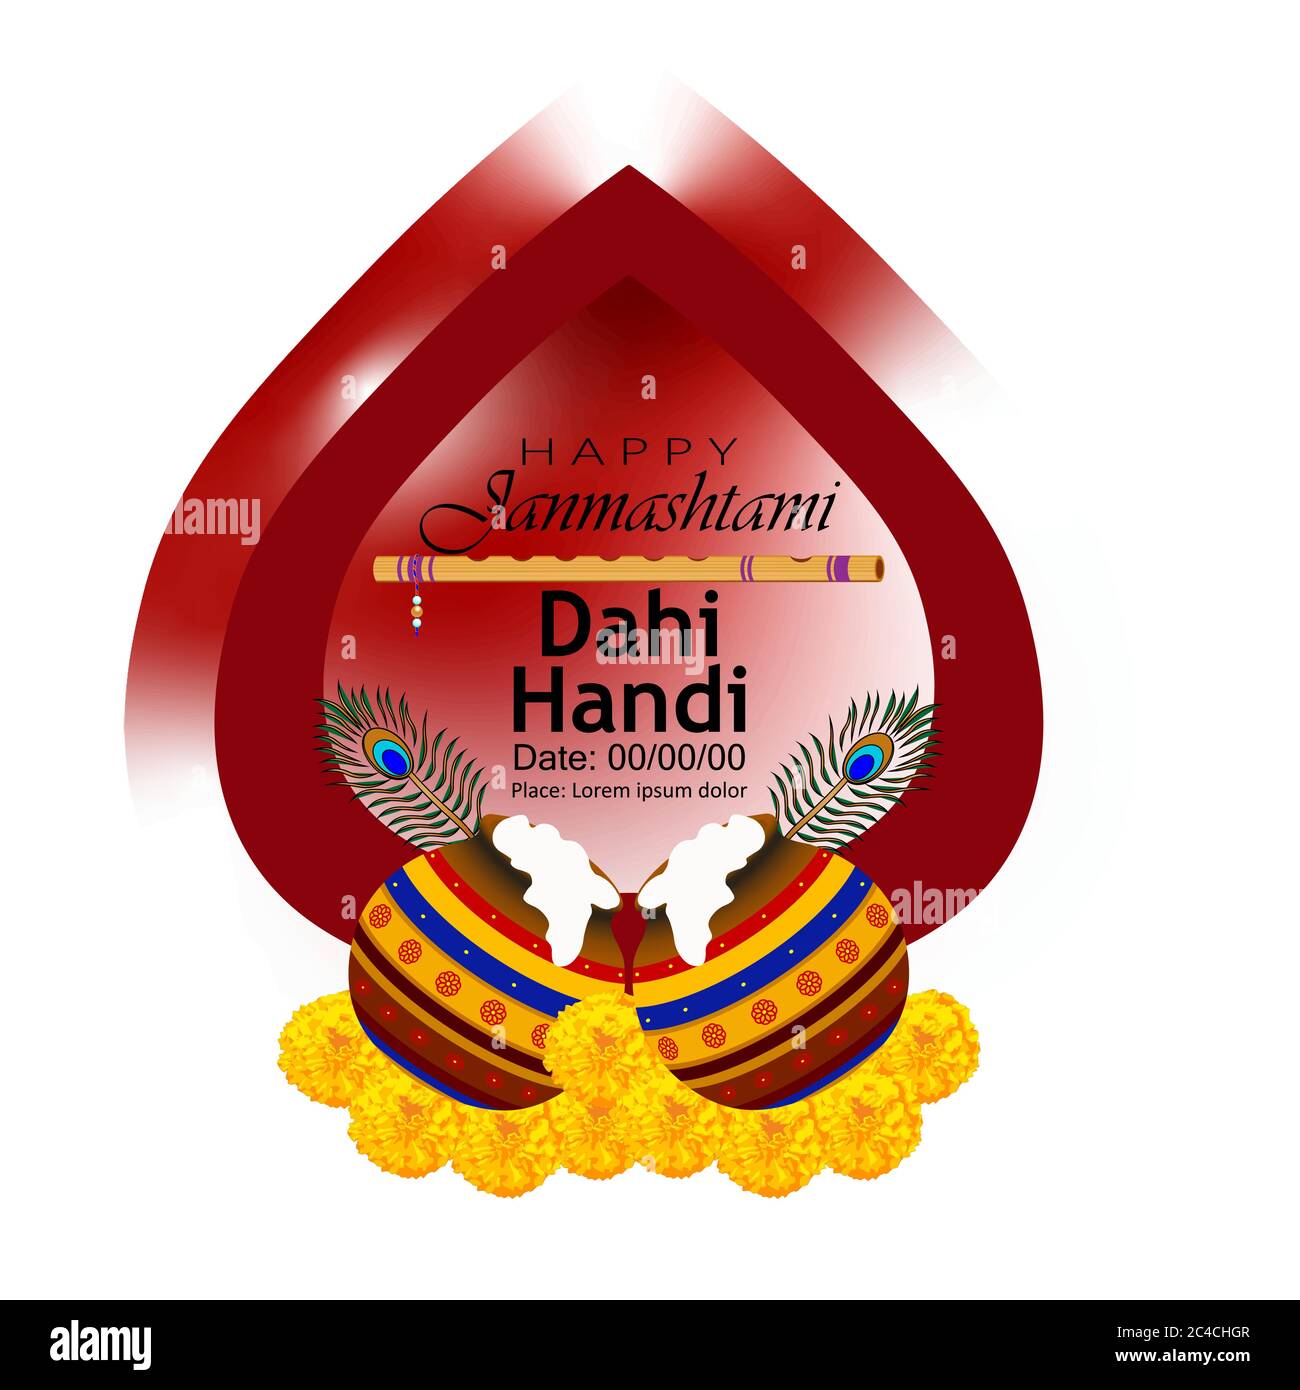 Vector illustration of Happy Janmashtami festival Lord Krishna playing bansuri in religious indian festival background,  Dahi Handi meaning cream and Stock Vector